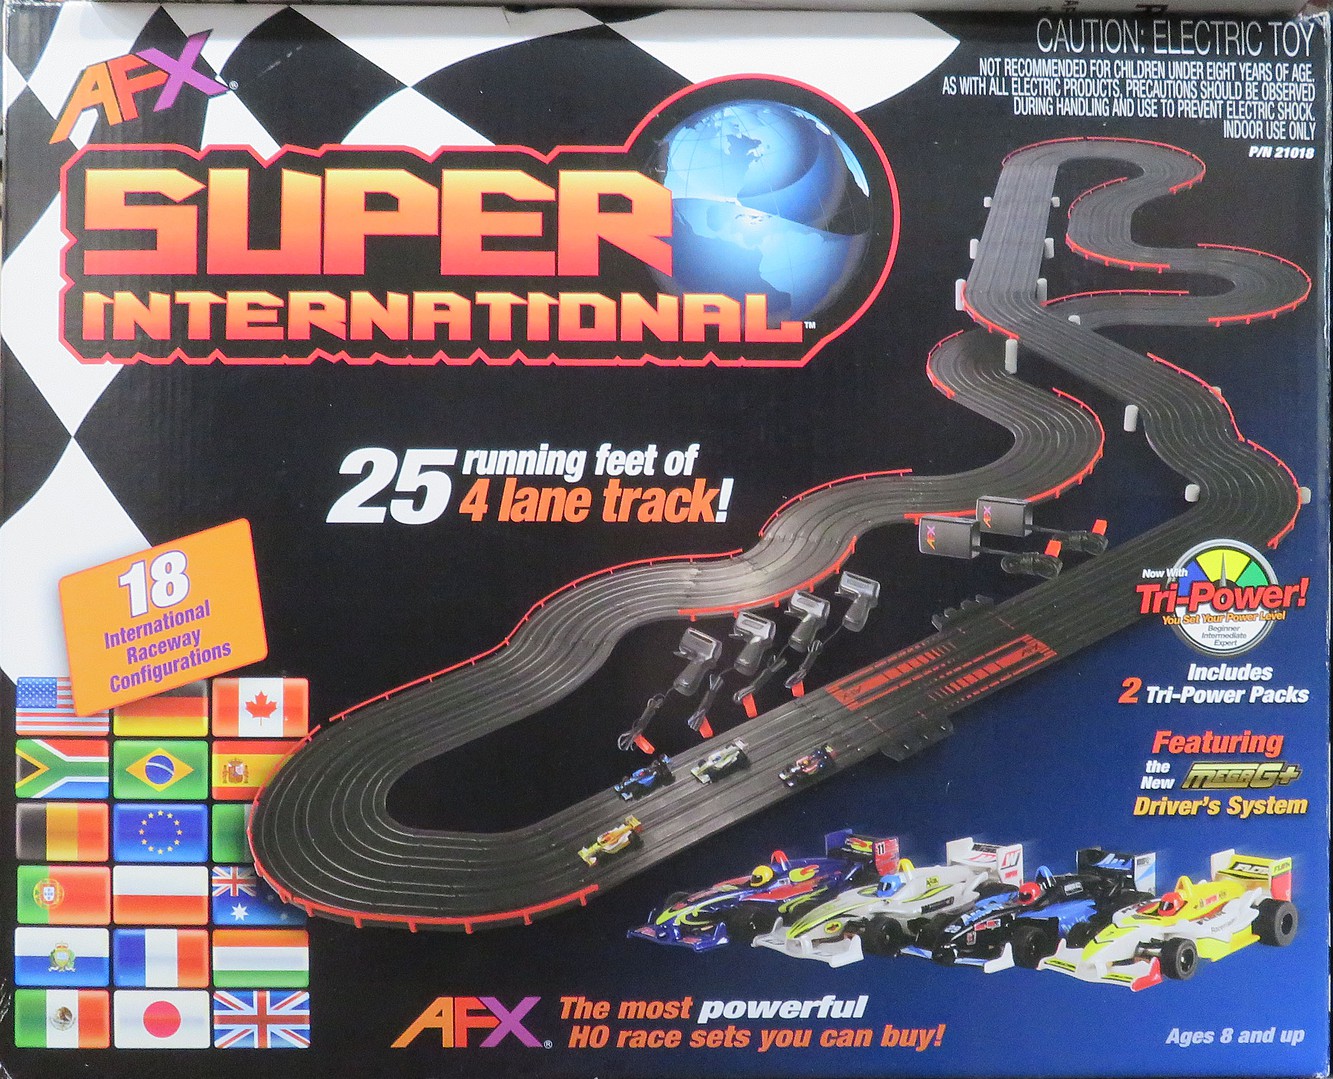 New AFX MegaG Super International Ho Slot Car Race Set Tri Power 21018 4 Lane 